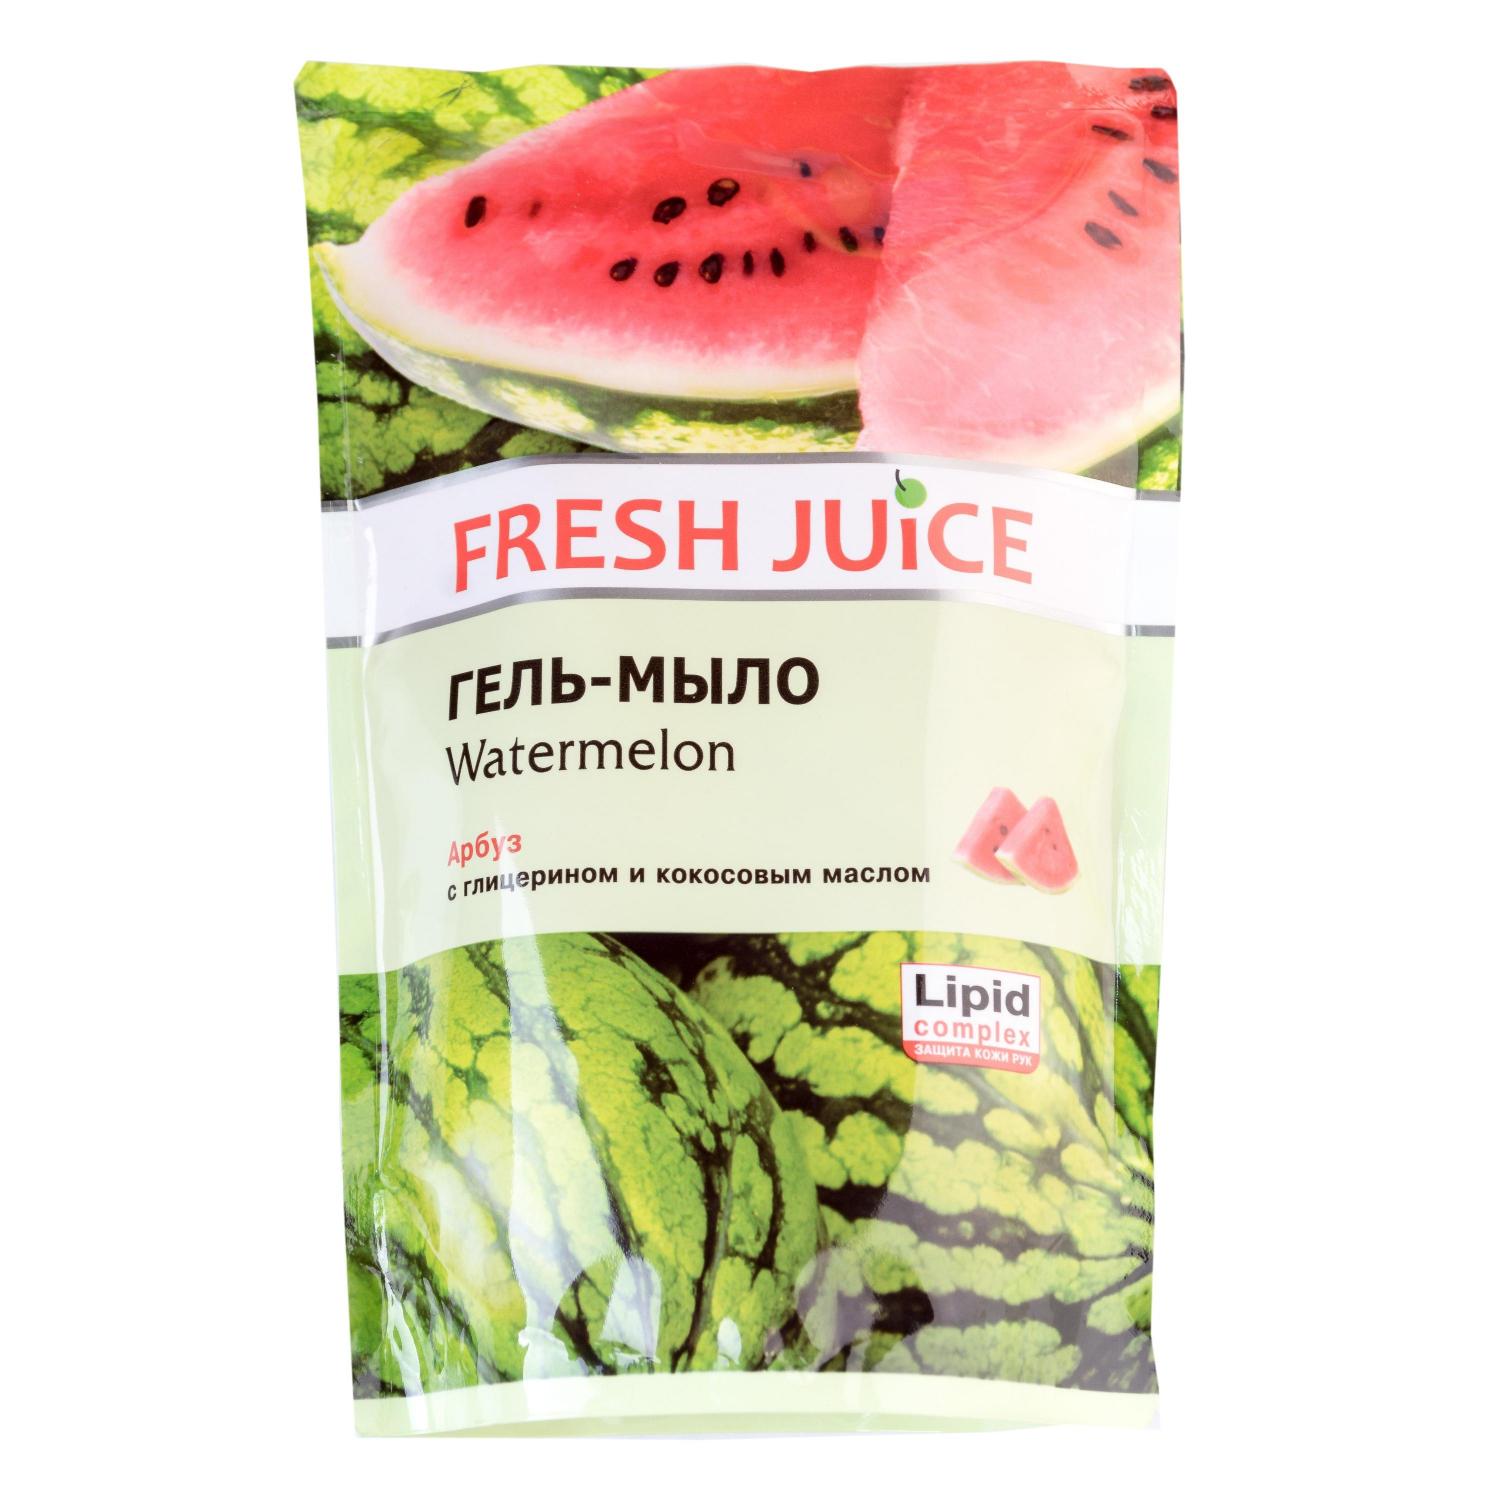 Гель-мыло жидкое Fresh Juice Арбуз запаска, 460мл (Артикул: 332600)